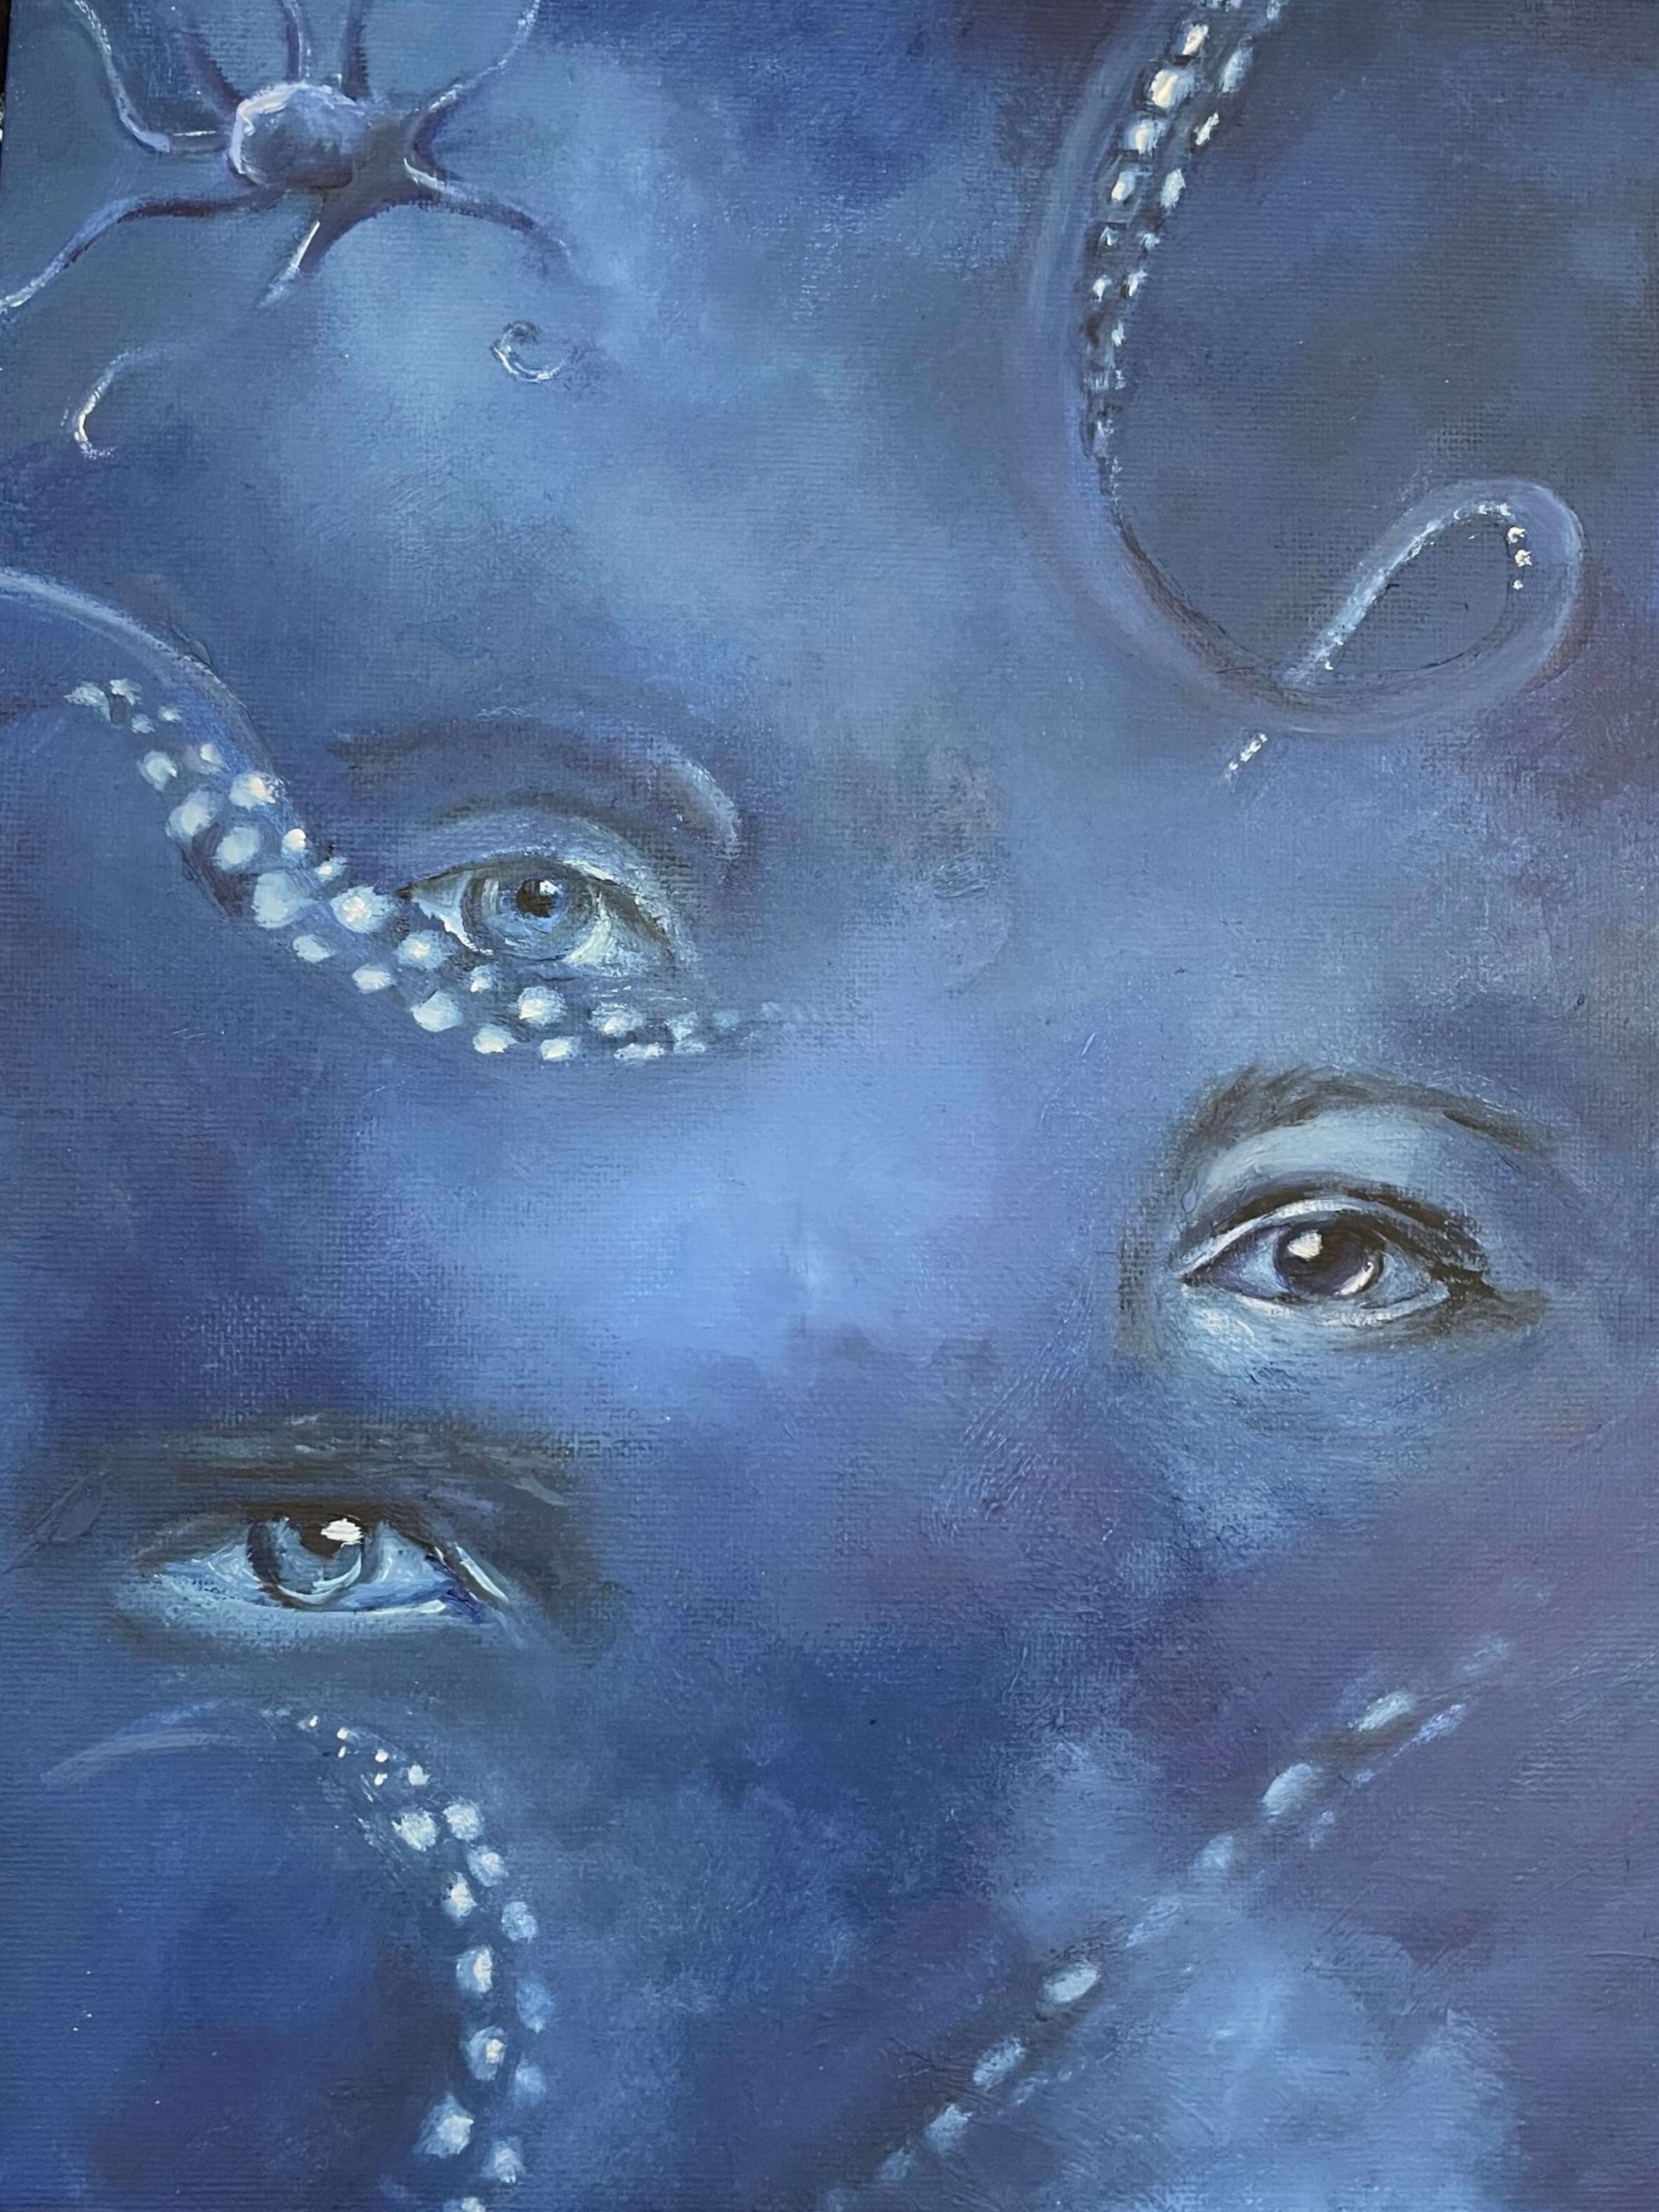 Protendo Kayleigh McCallum Art Abstract Painting octopus framed 2.jpg